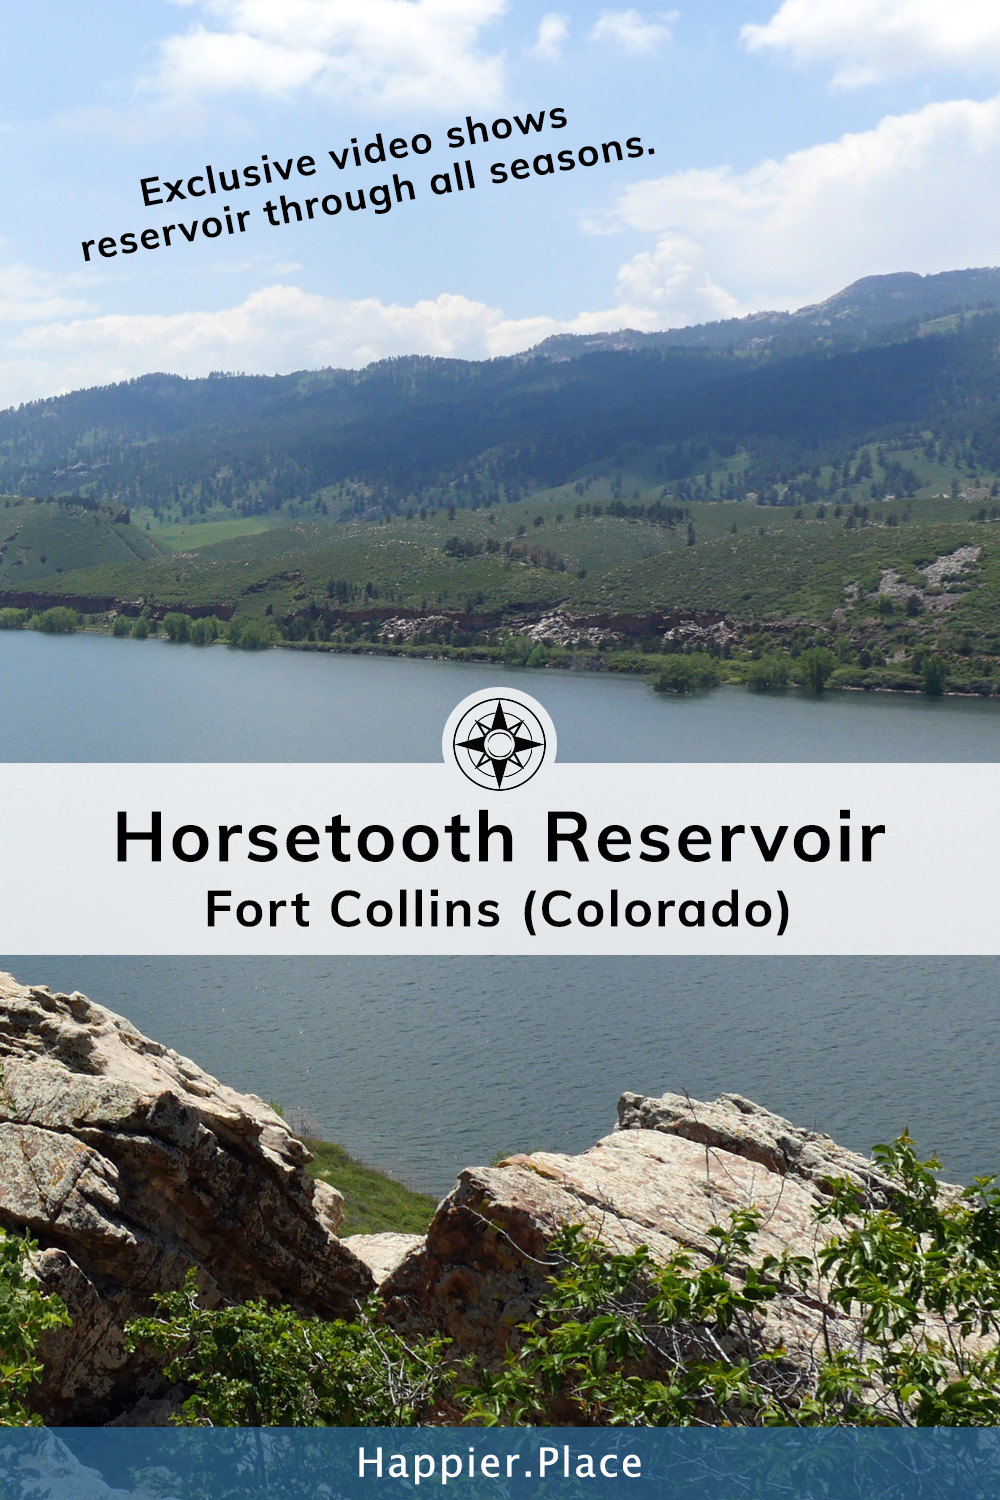 Horsetooth Reservoir in Fort Collins Colorado.